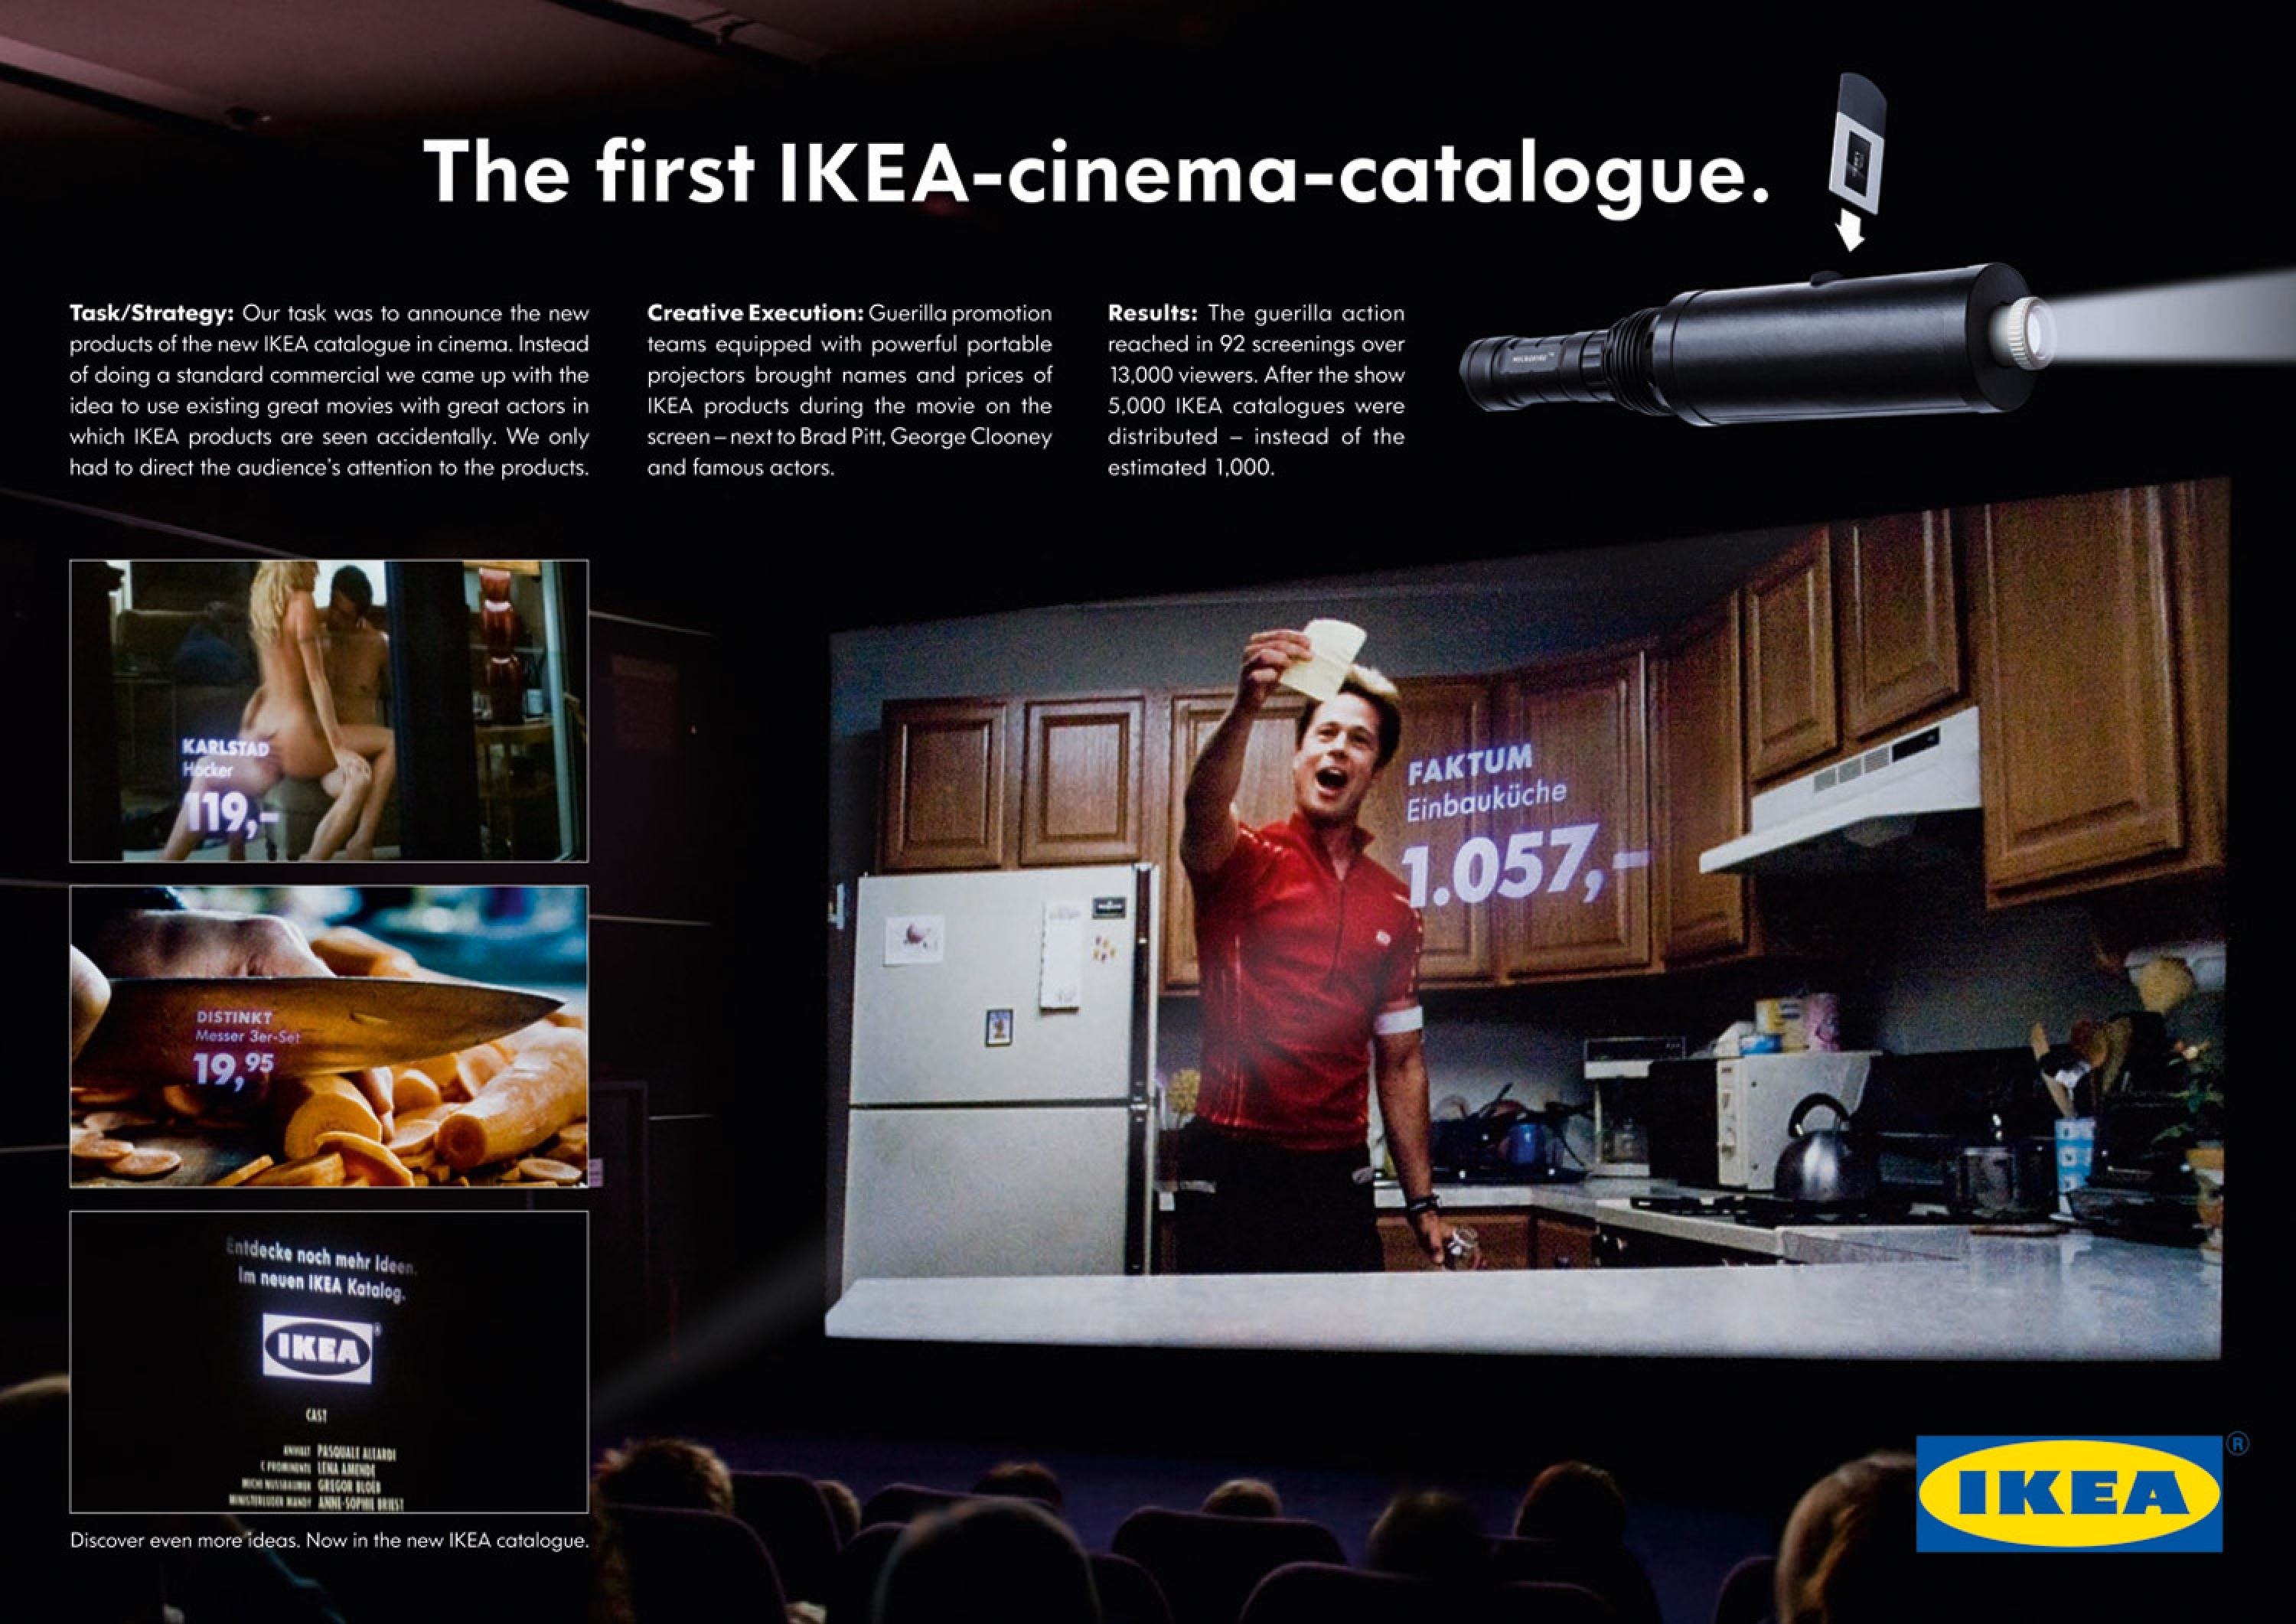 THE FIRST IKEA-CINEMA-CATALOGUE